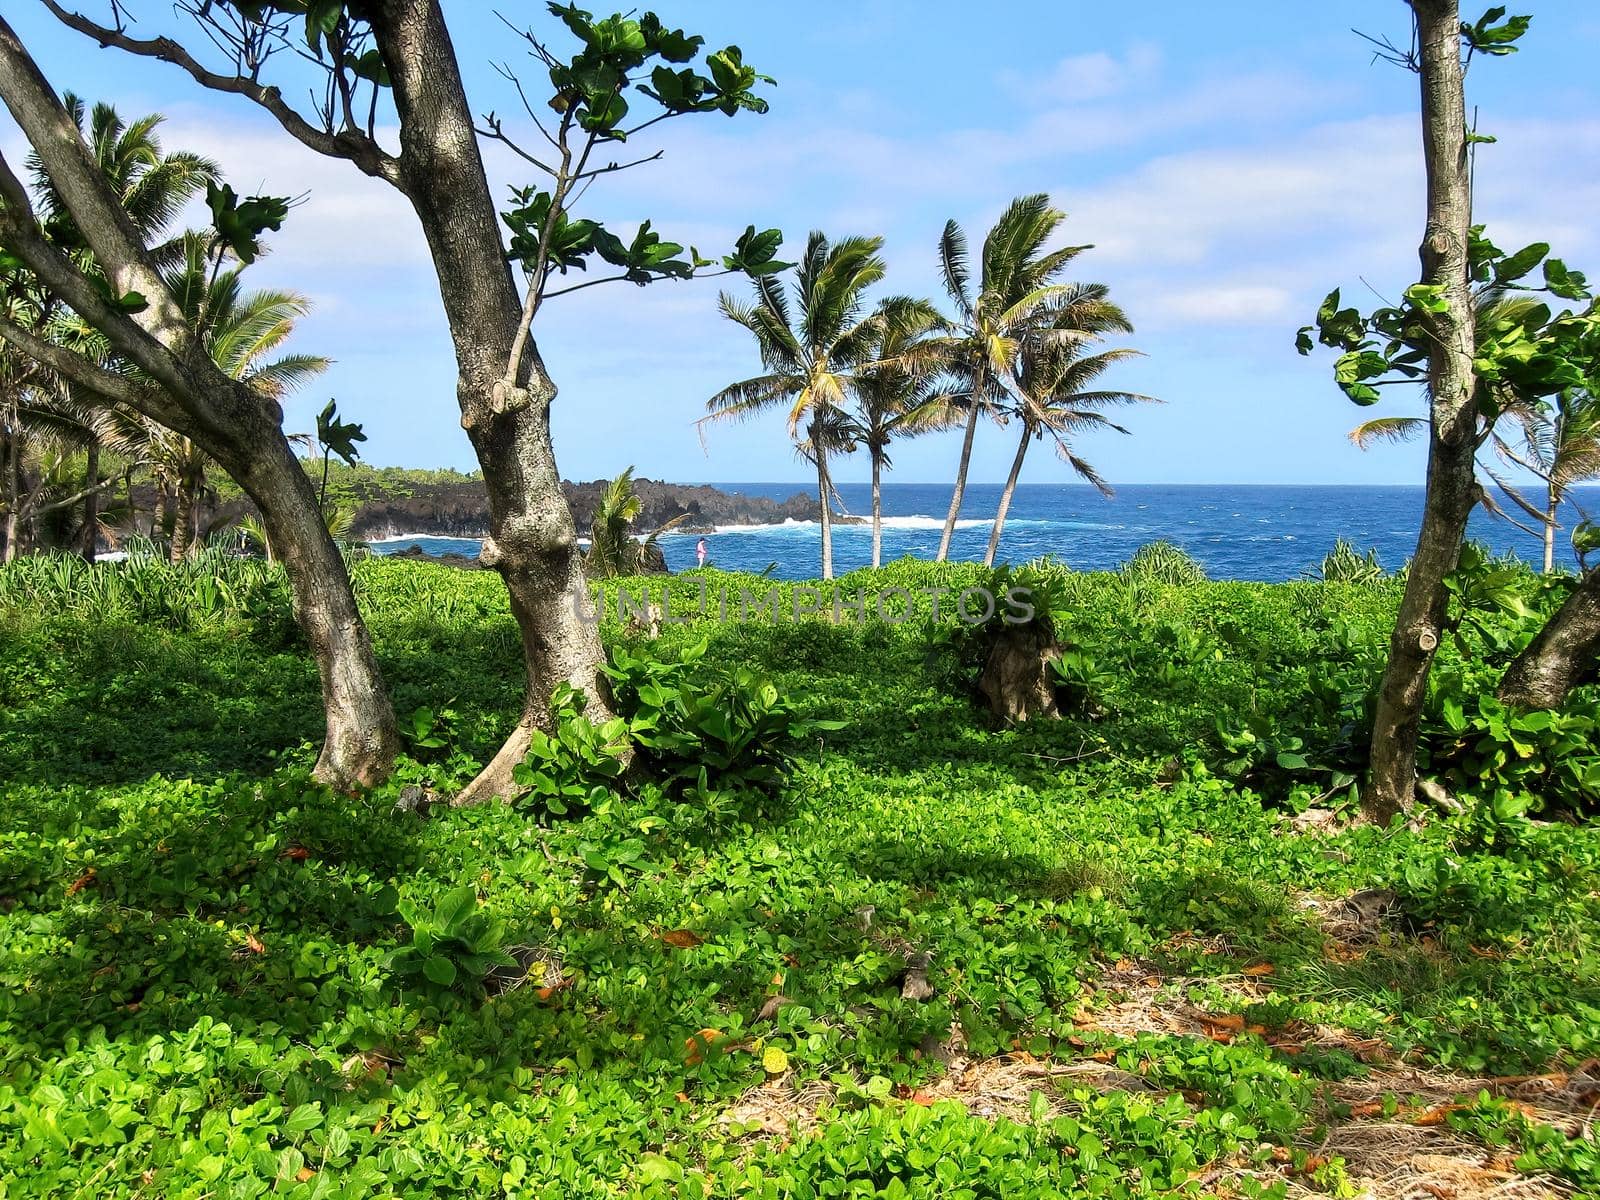 Lush Vegetation and Palm Trees Grow Near the Ocean at Waianapanapa State Park in Hana, Hawaii by markvandam